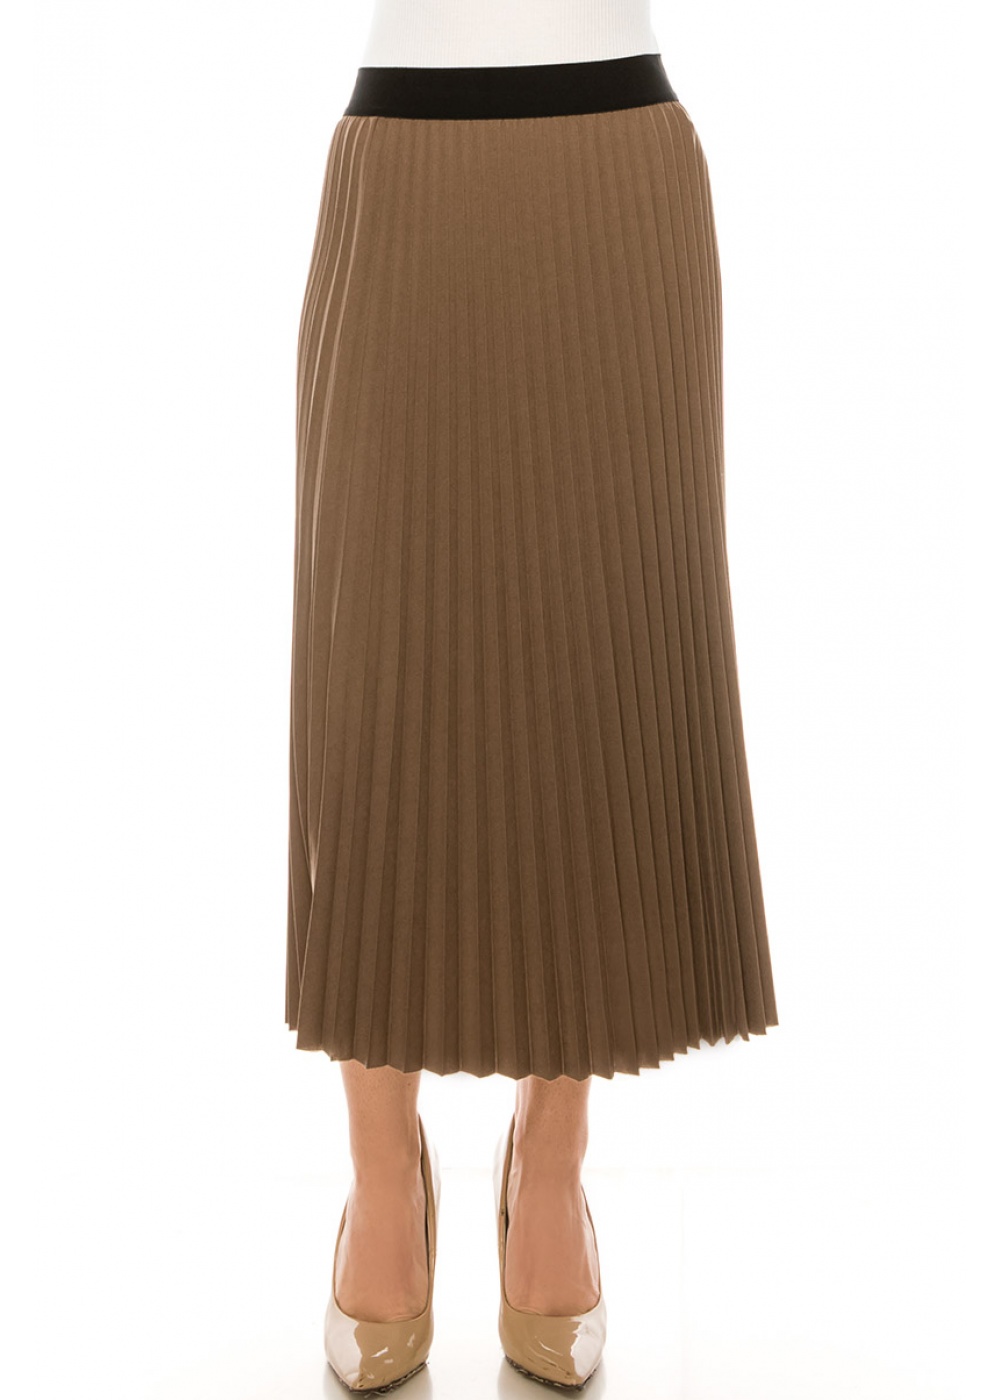 Skirt SK080 Brown